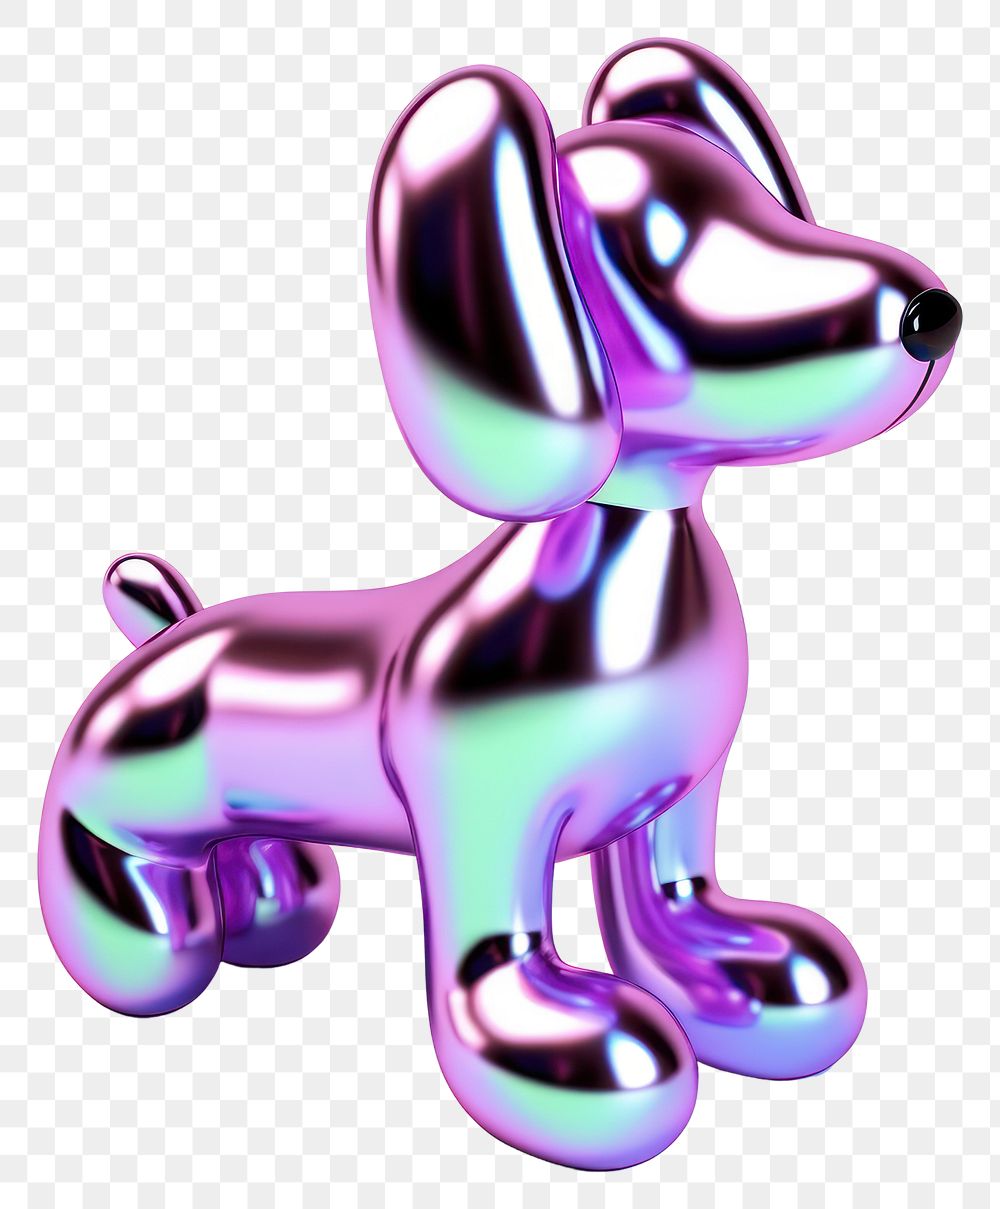 PNG Balloon dog figurine purple toy.